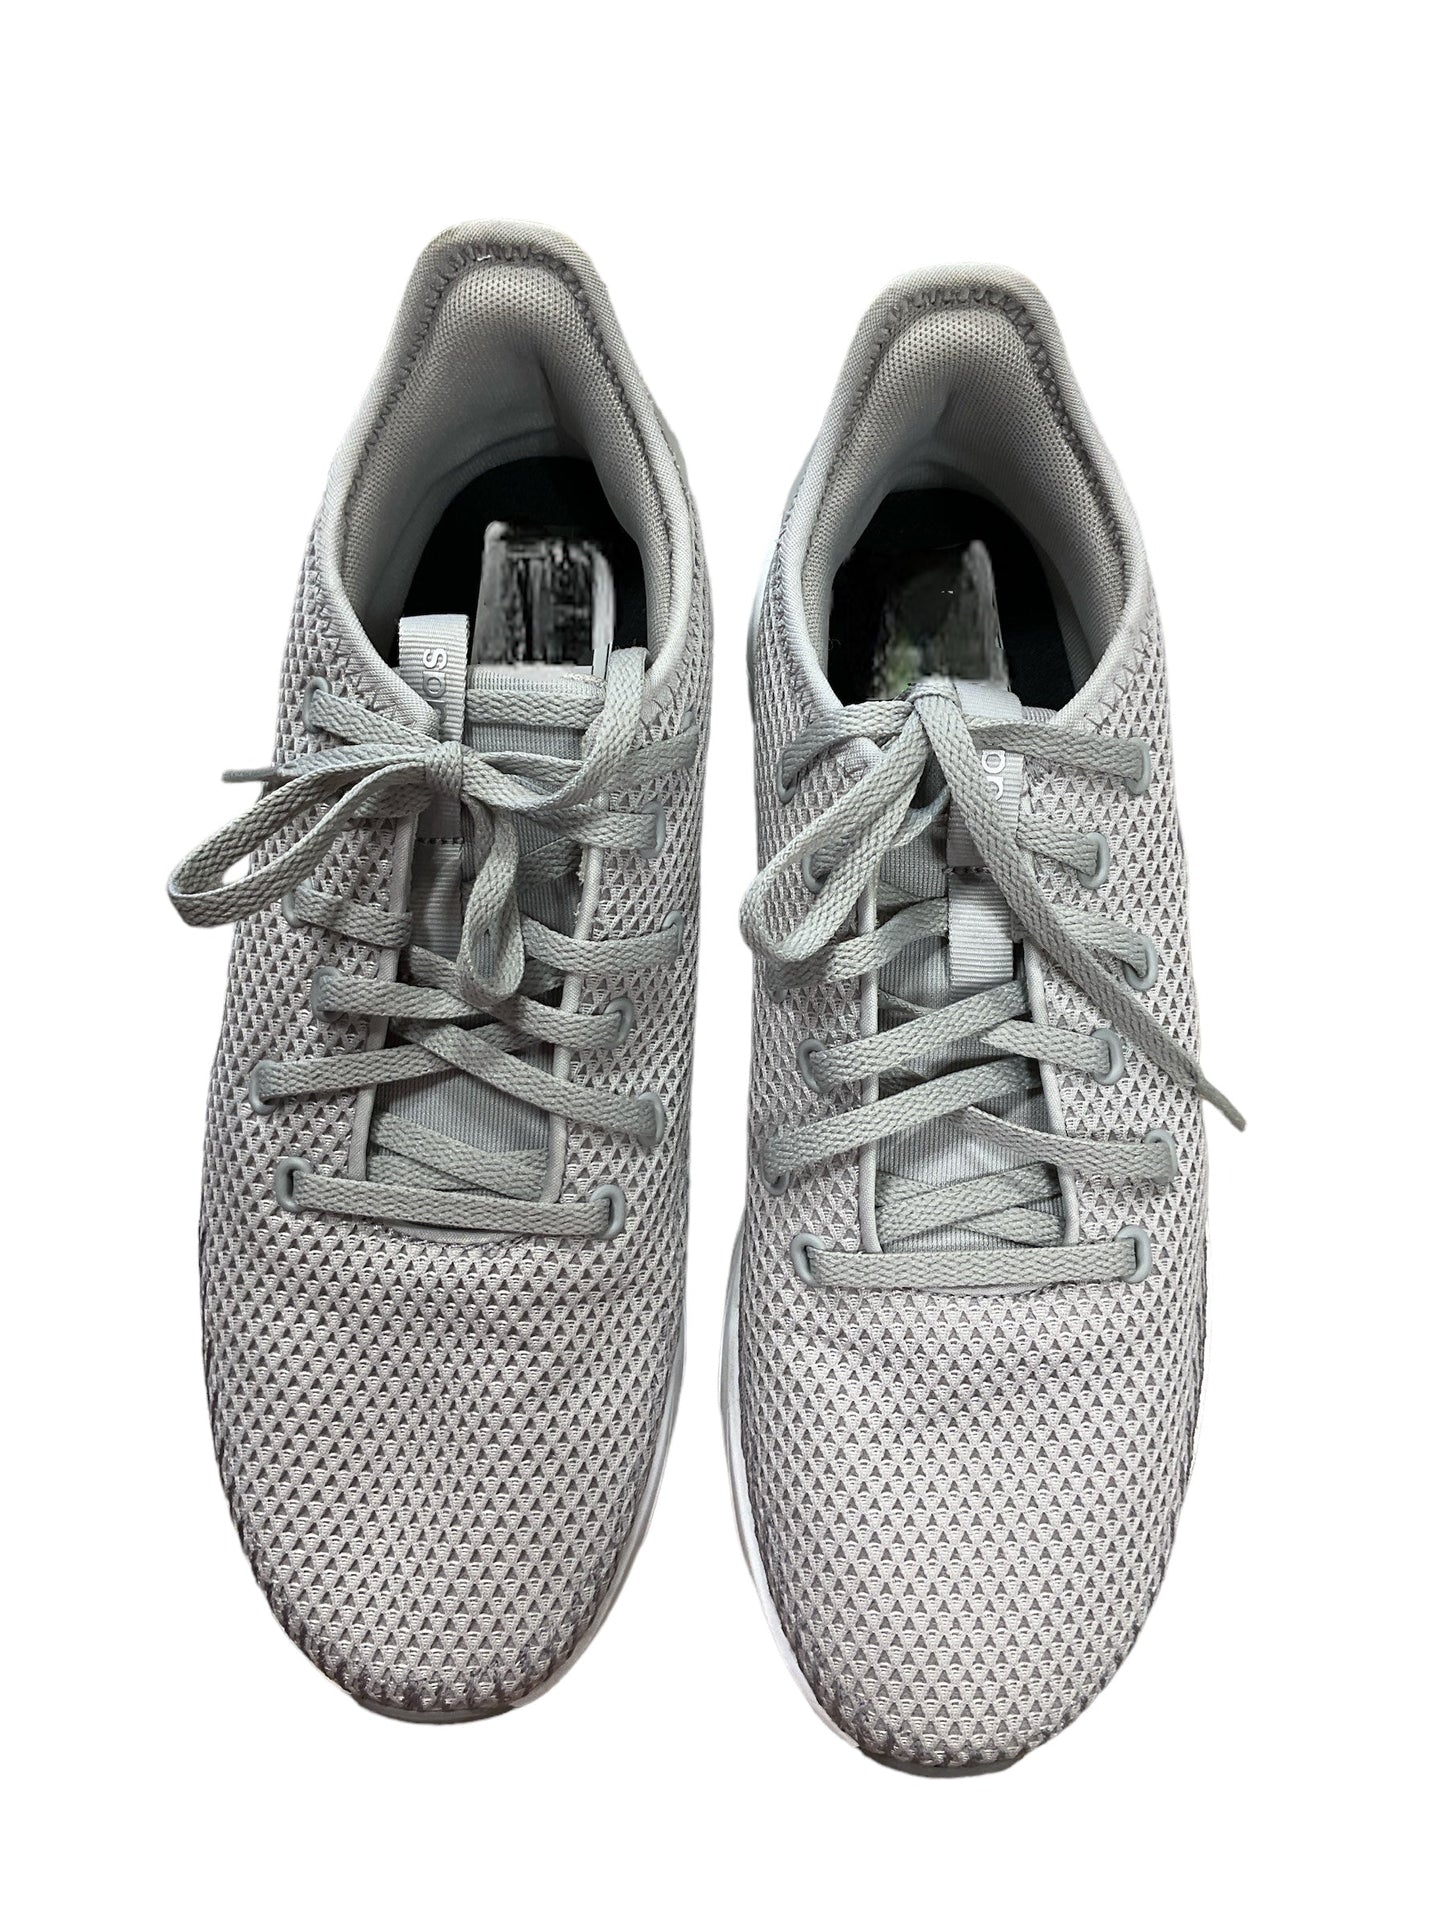 Grey Shoes Athletic Adidas, Size 9